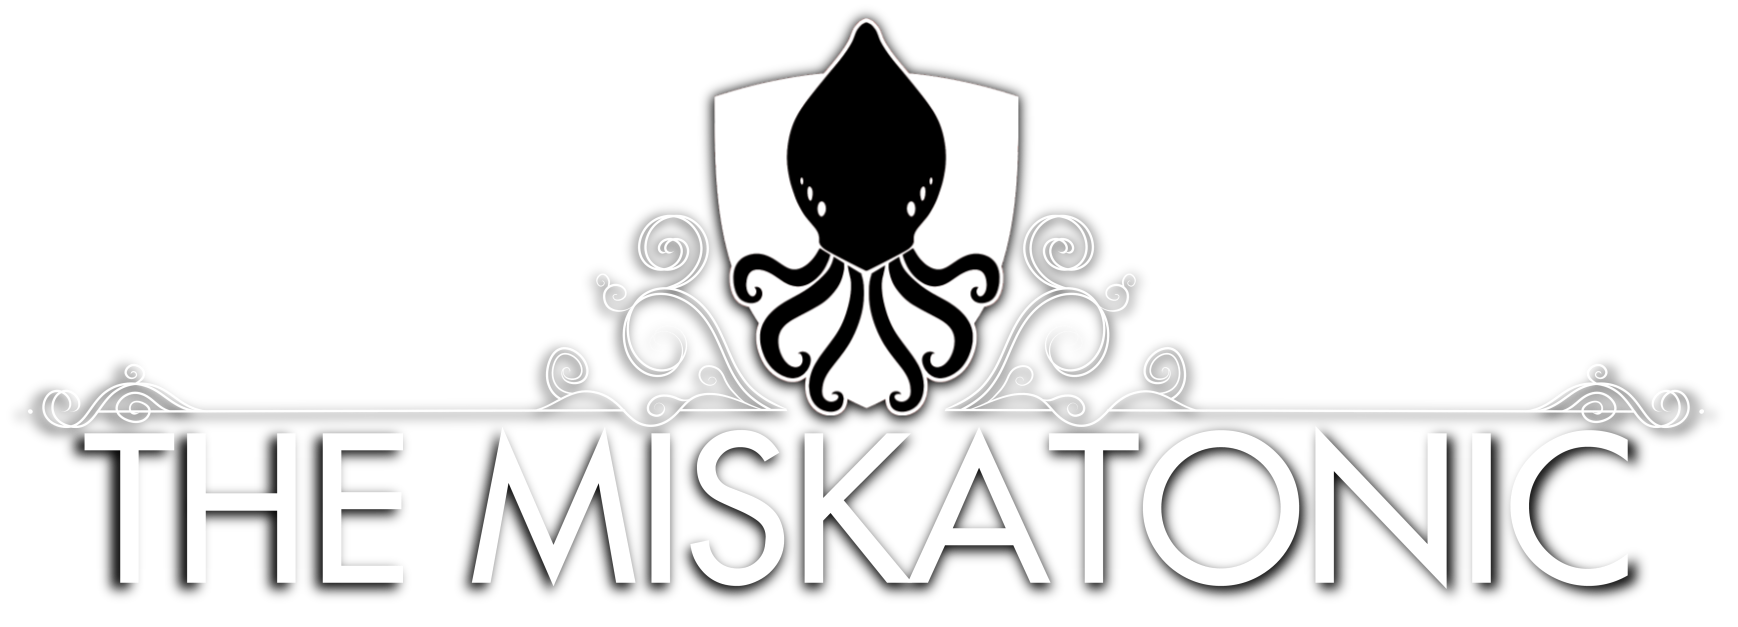 The Miskatonic